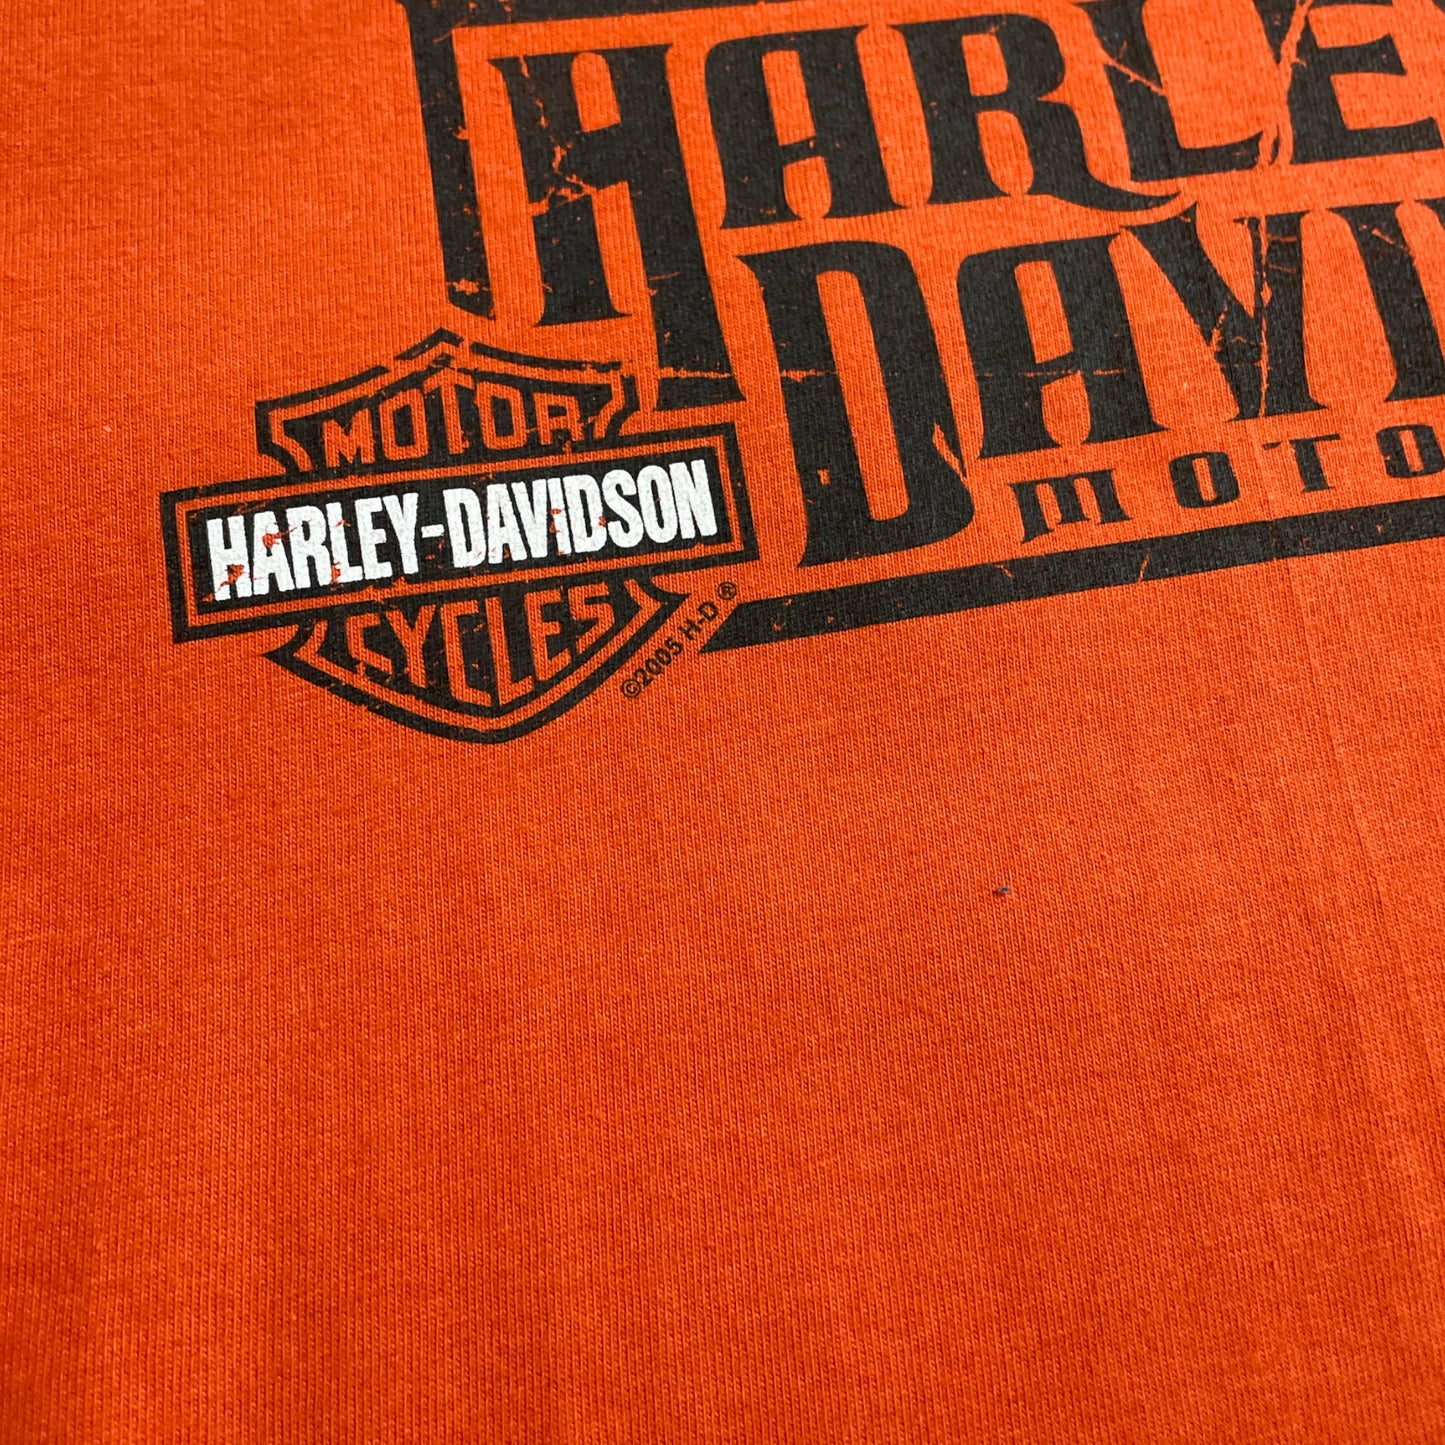 2005 Harley Davidson London Tee Size M